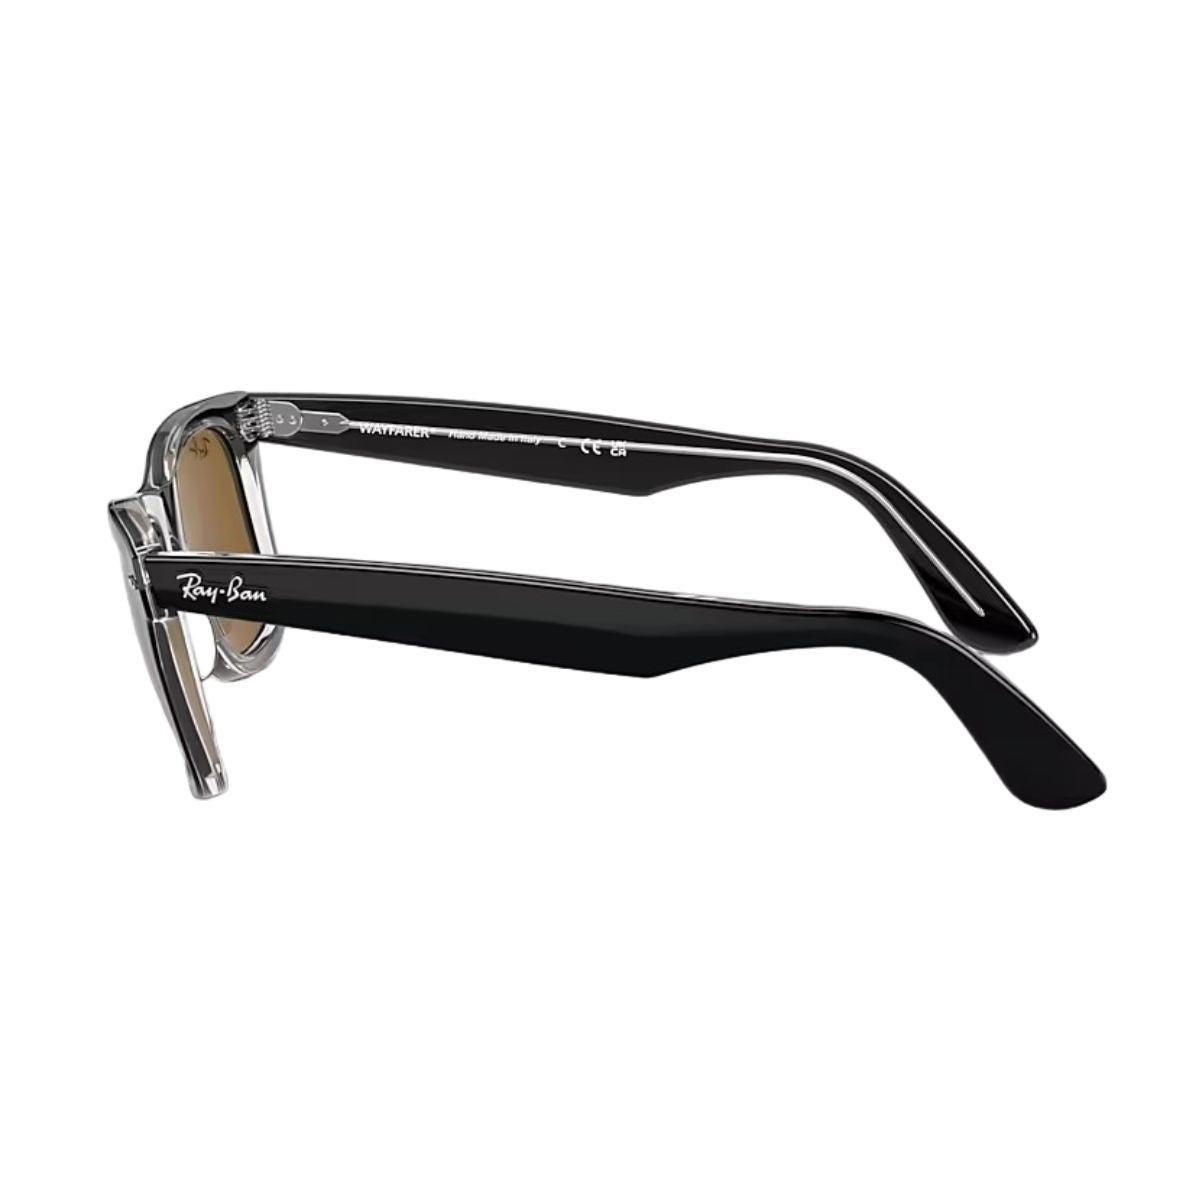 "Rayban 2140 1294/33 Stylish Wayfarer Sunglasses For Men And Women At Optorium"